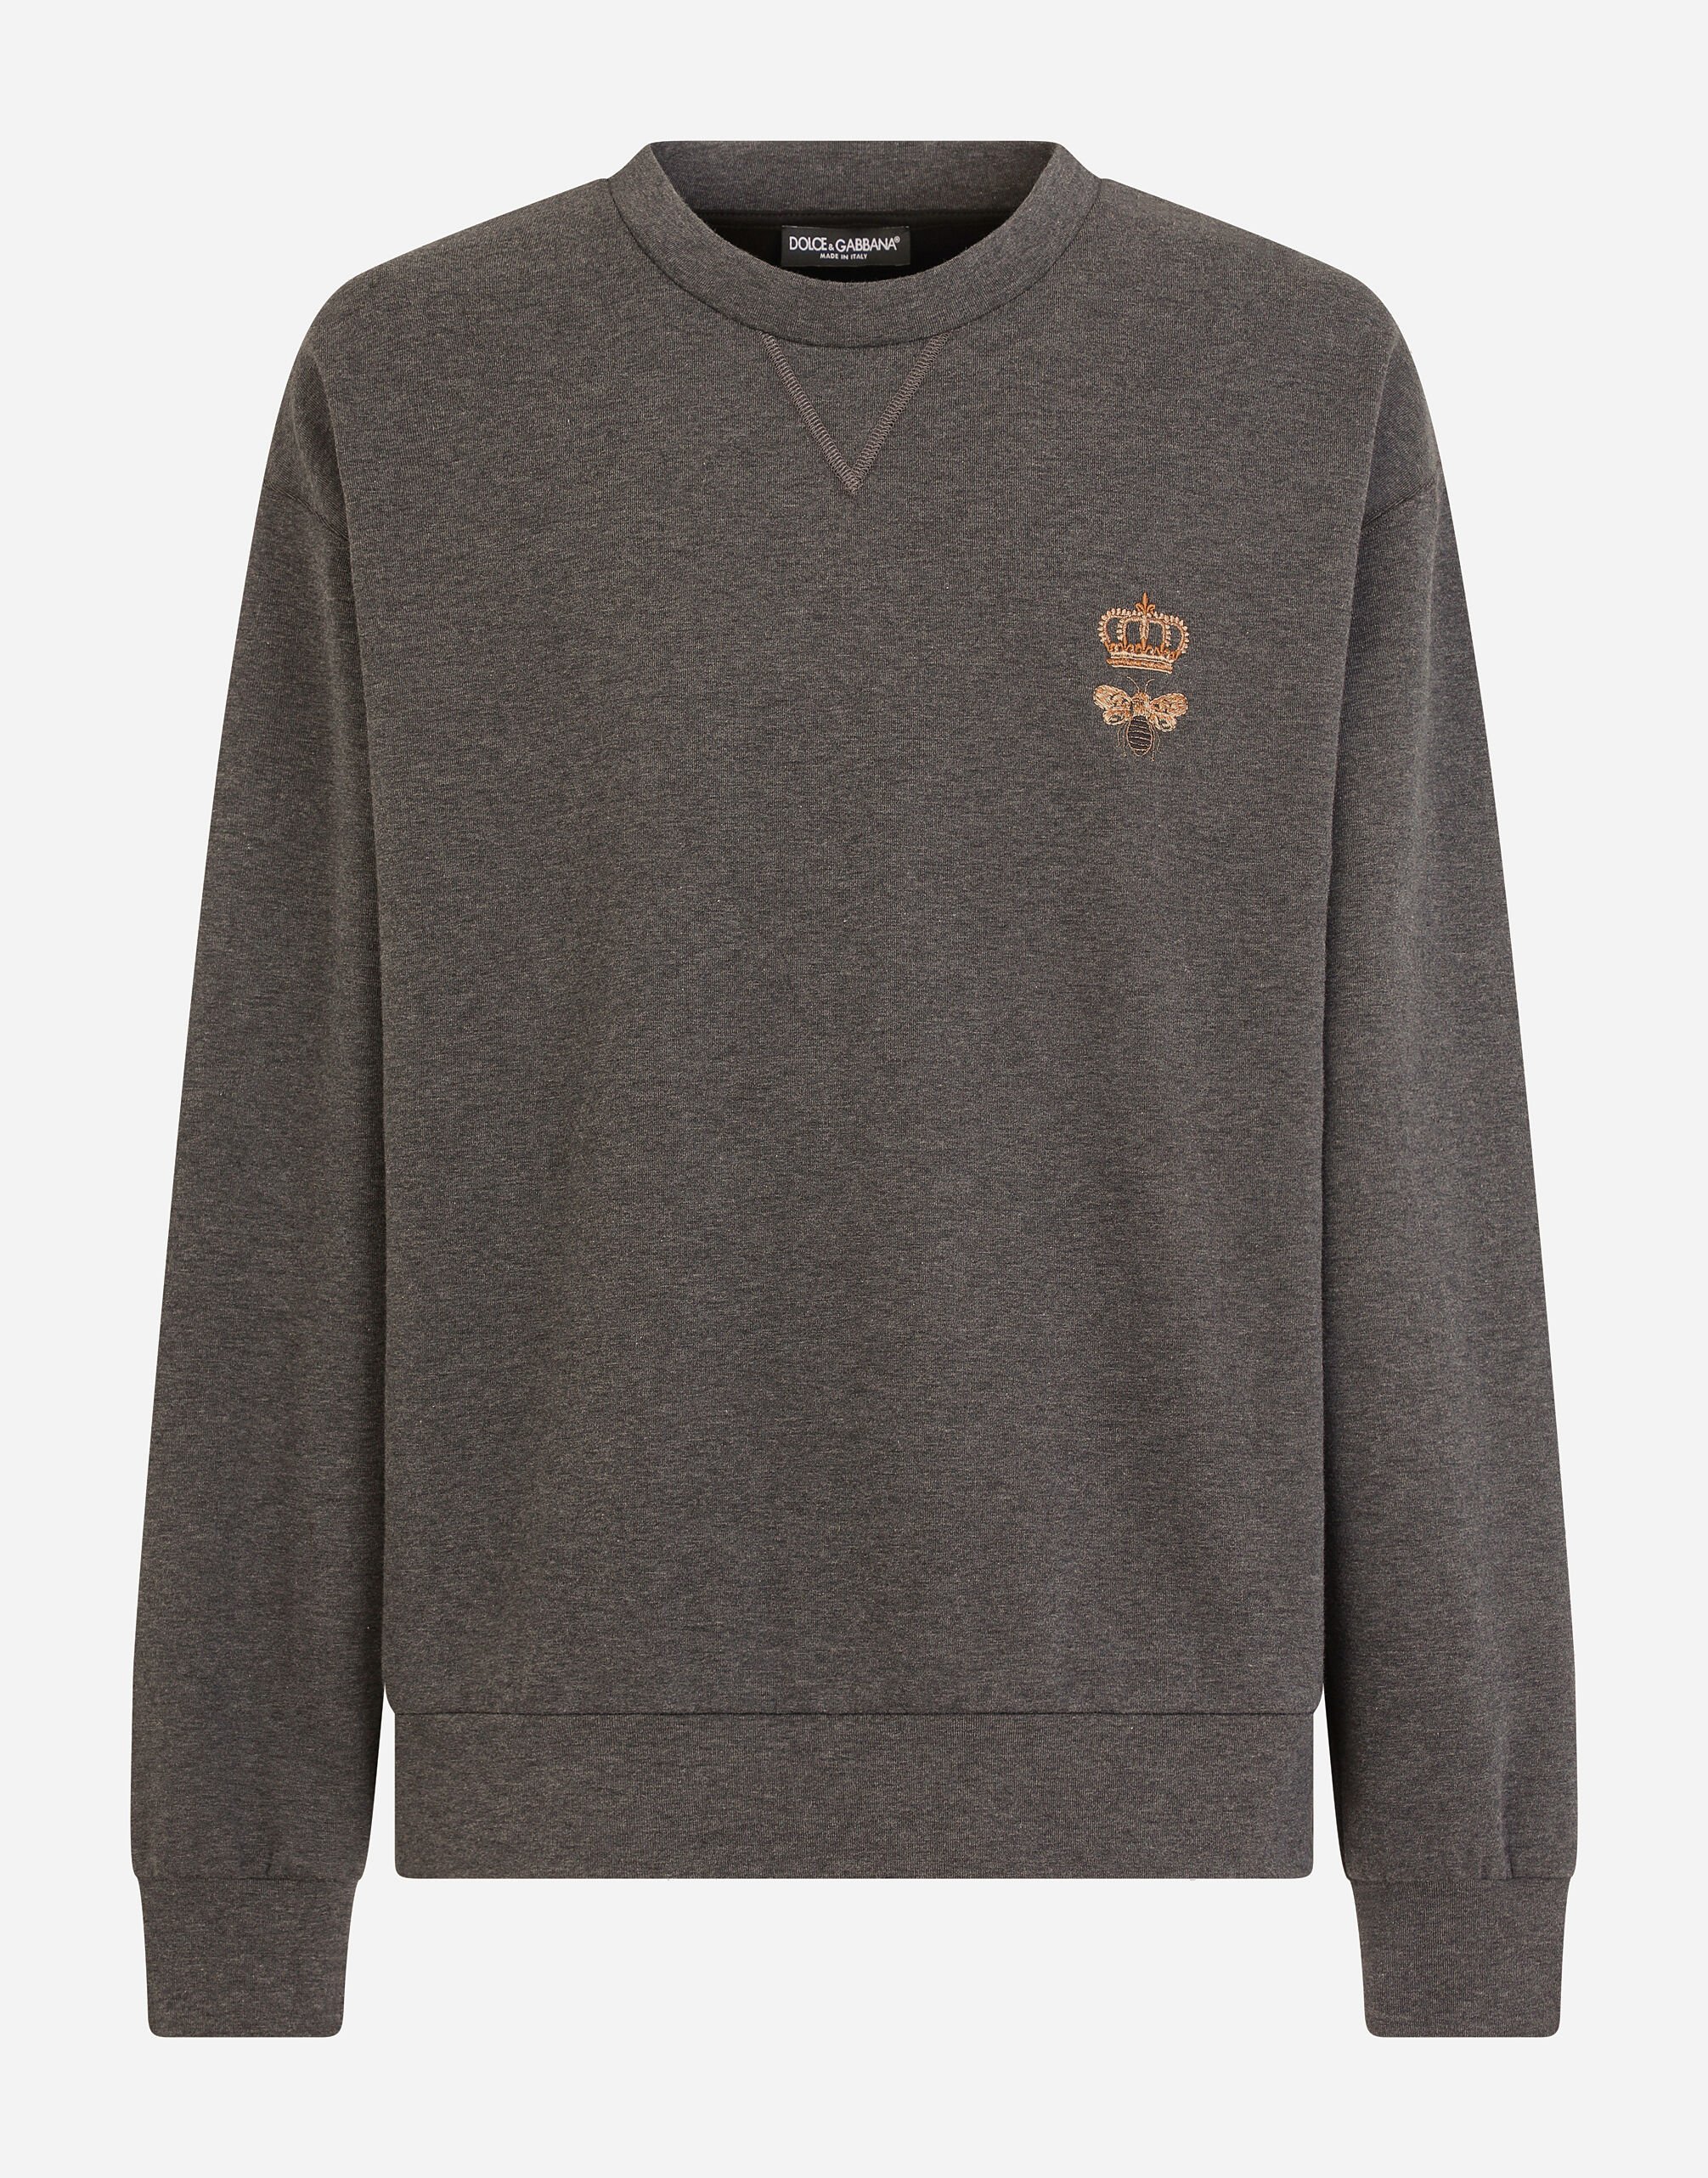 Dolce&Gabbana Jersey sweatshirt with embroidery Black GY6IETFUFJR